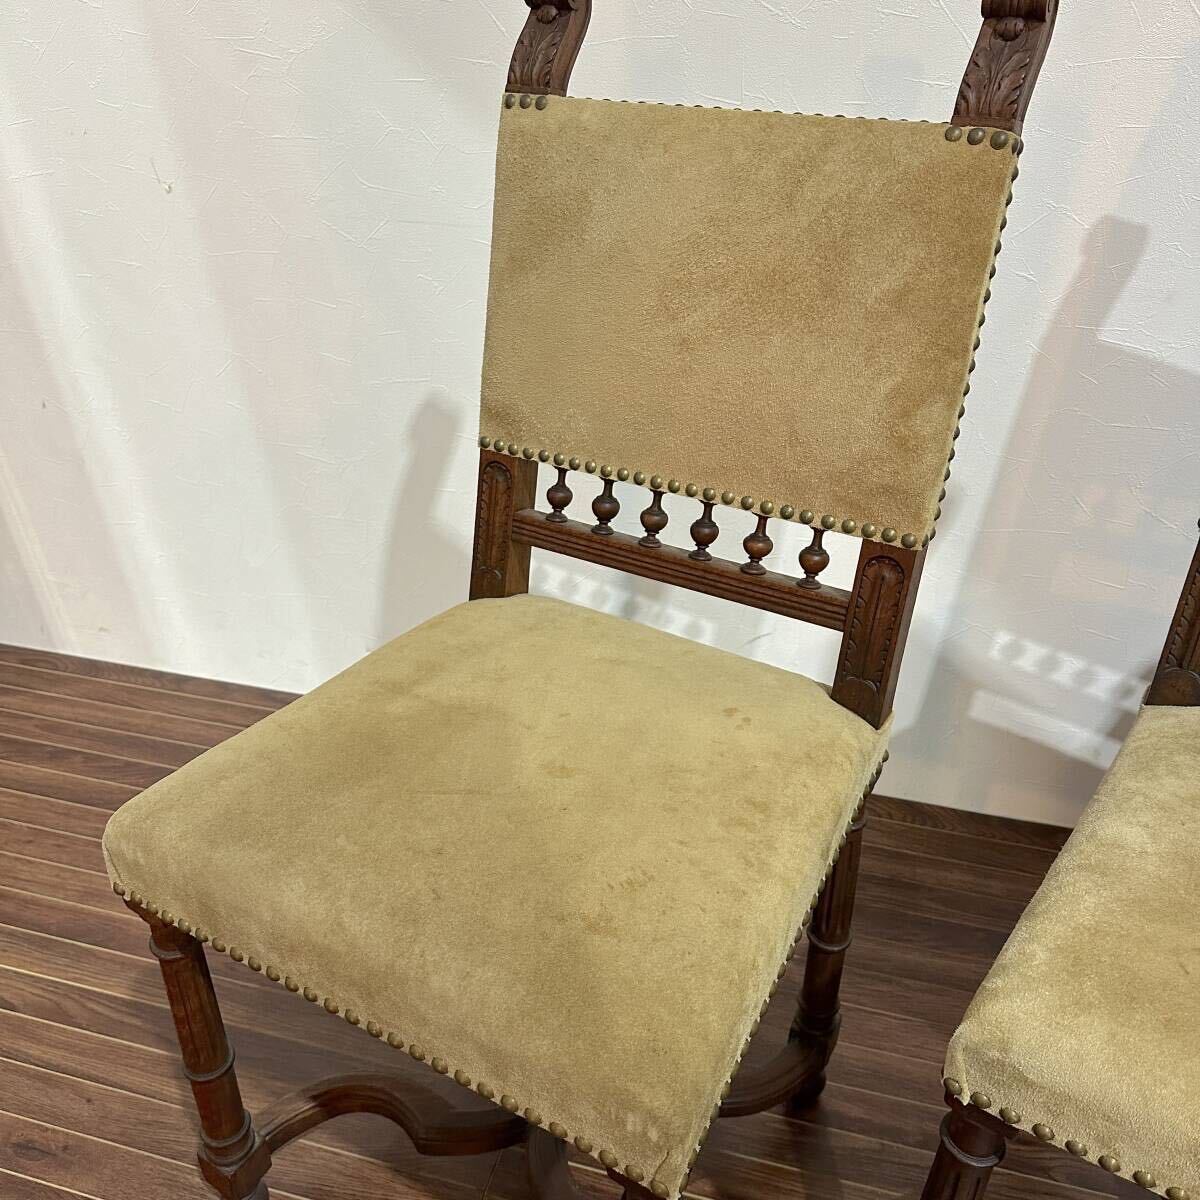  Франция античный Anne li2. форма Vintage старый дерево стул натуральная кожа . античный стул стул 2 ножек комплект 